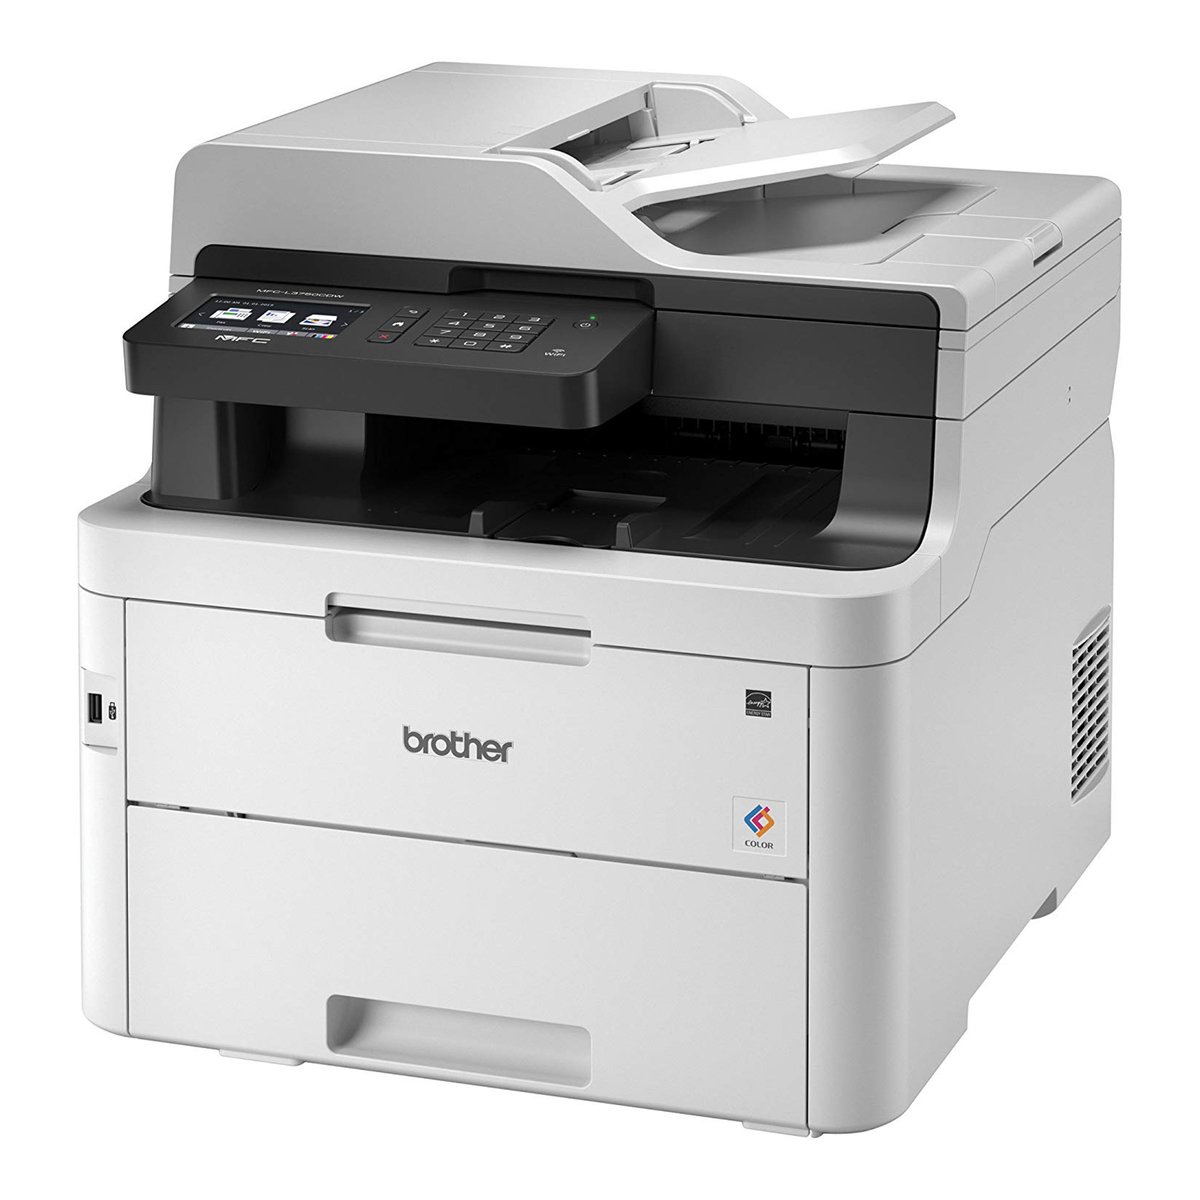 Brother Multi-Function Colour Laserjet Printer MFC-L3750CDW